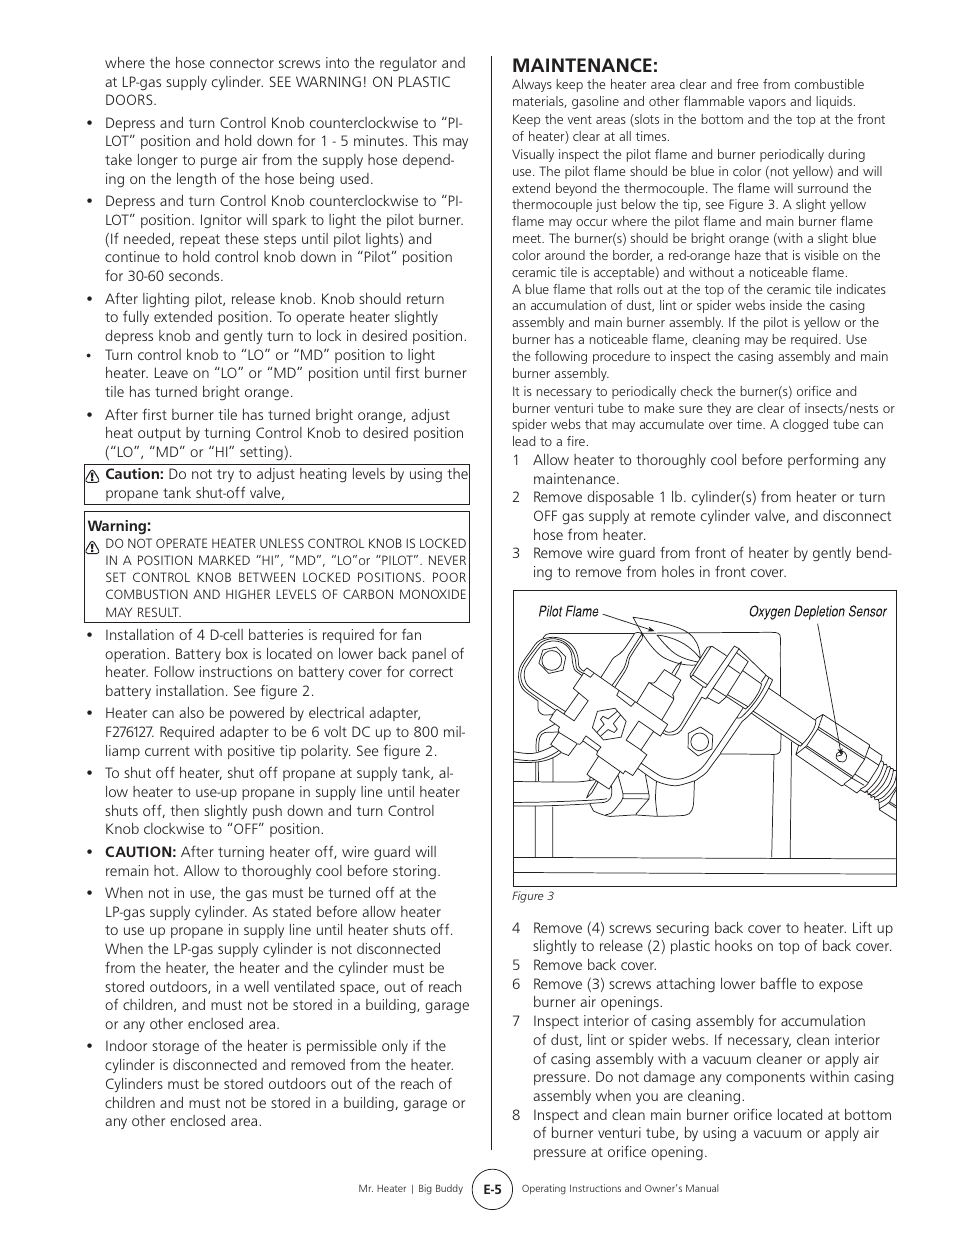 Maintenance | Mr. Heater BIG BUDDY MH188 User Manual | Page 5 / 16